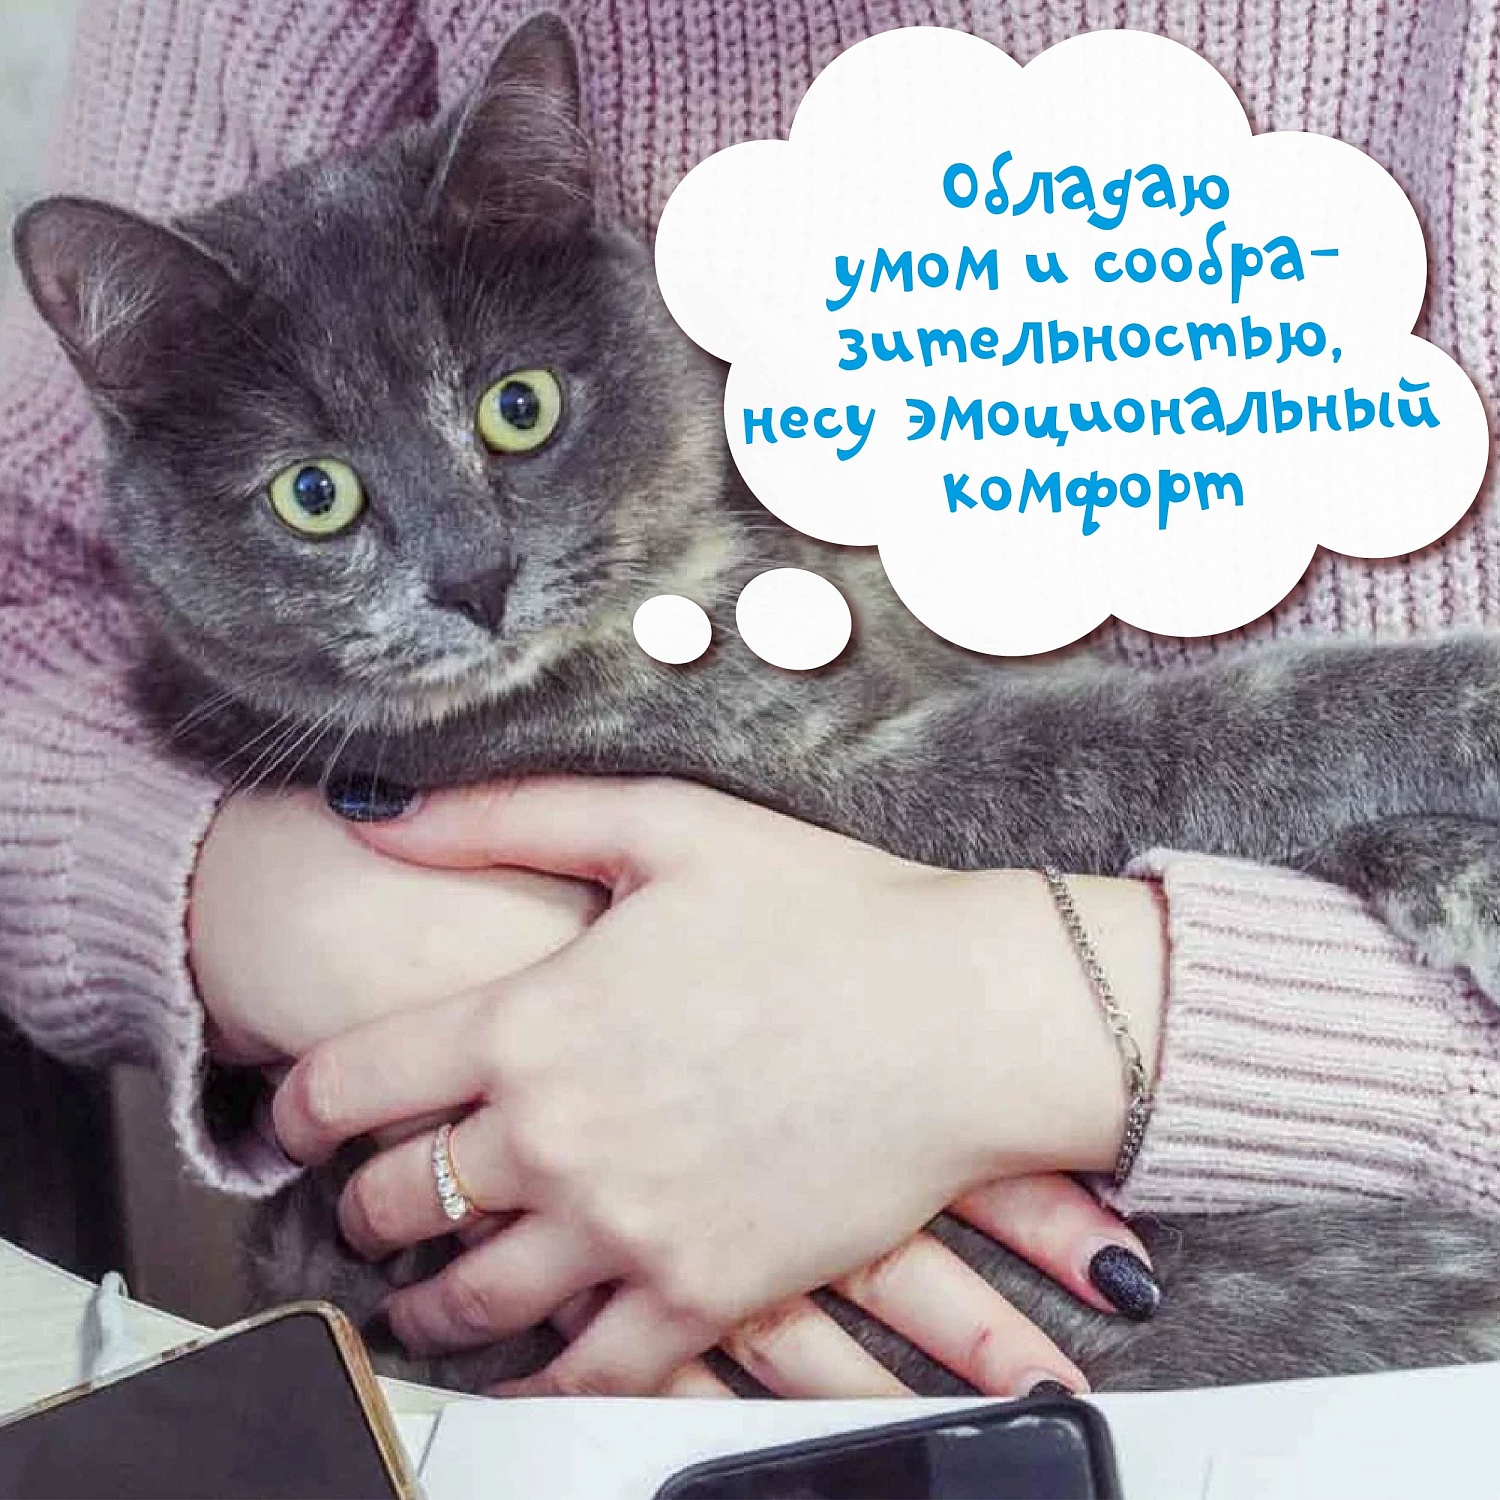  Знакомитесь - наша новая сотрудница корпоративный кото-психолог Мирослава!